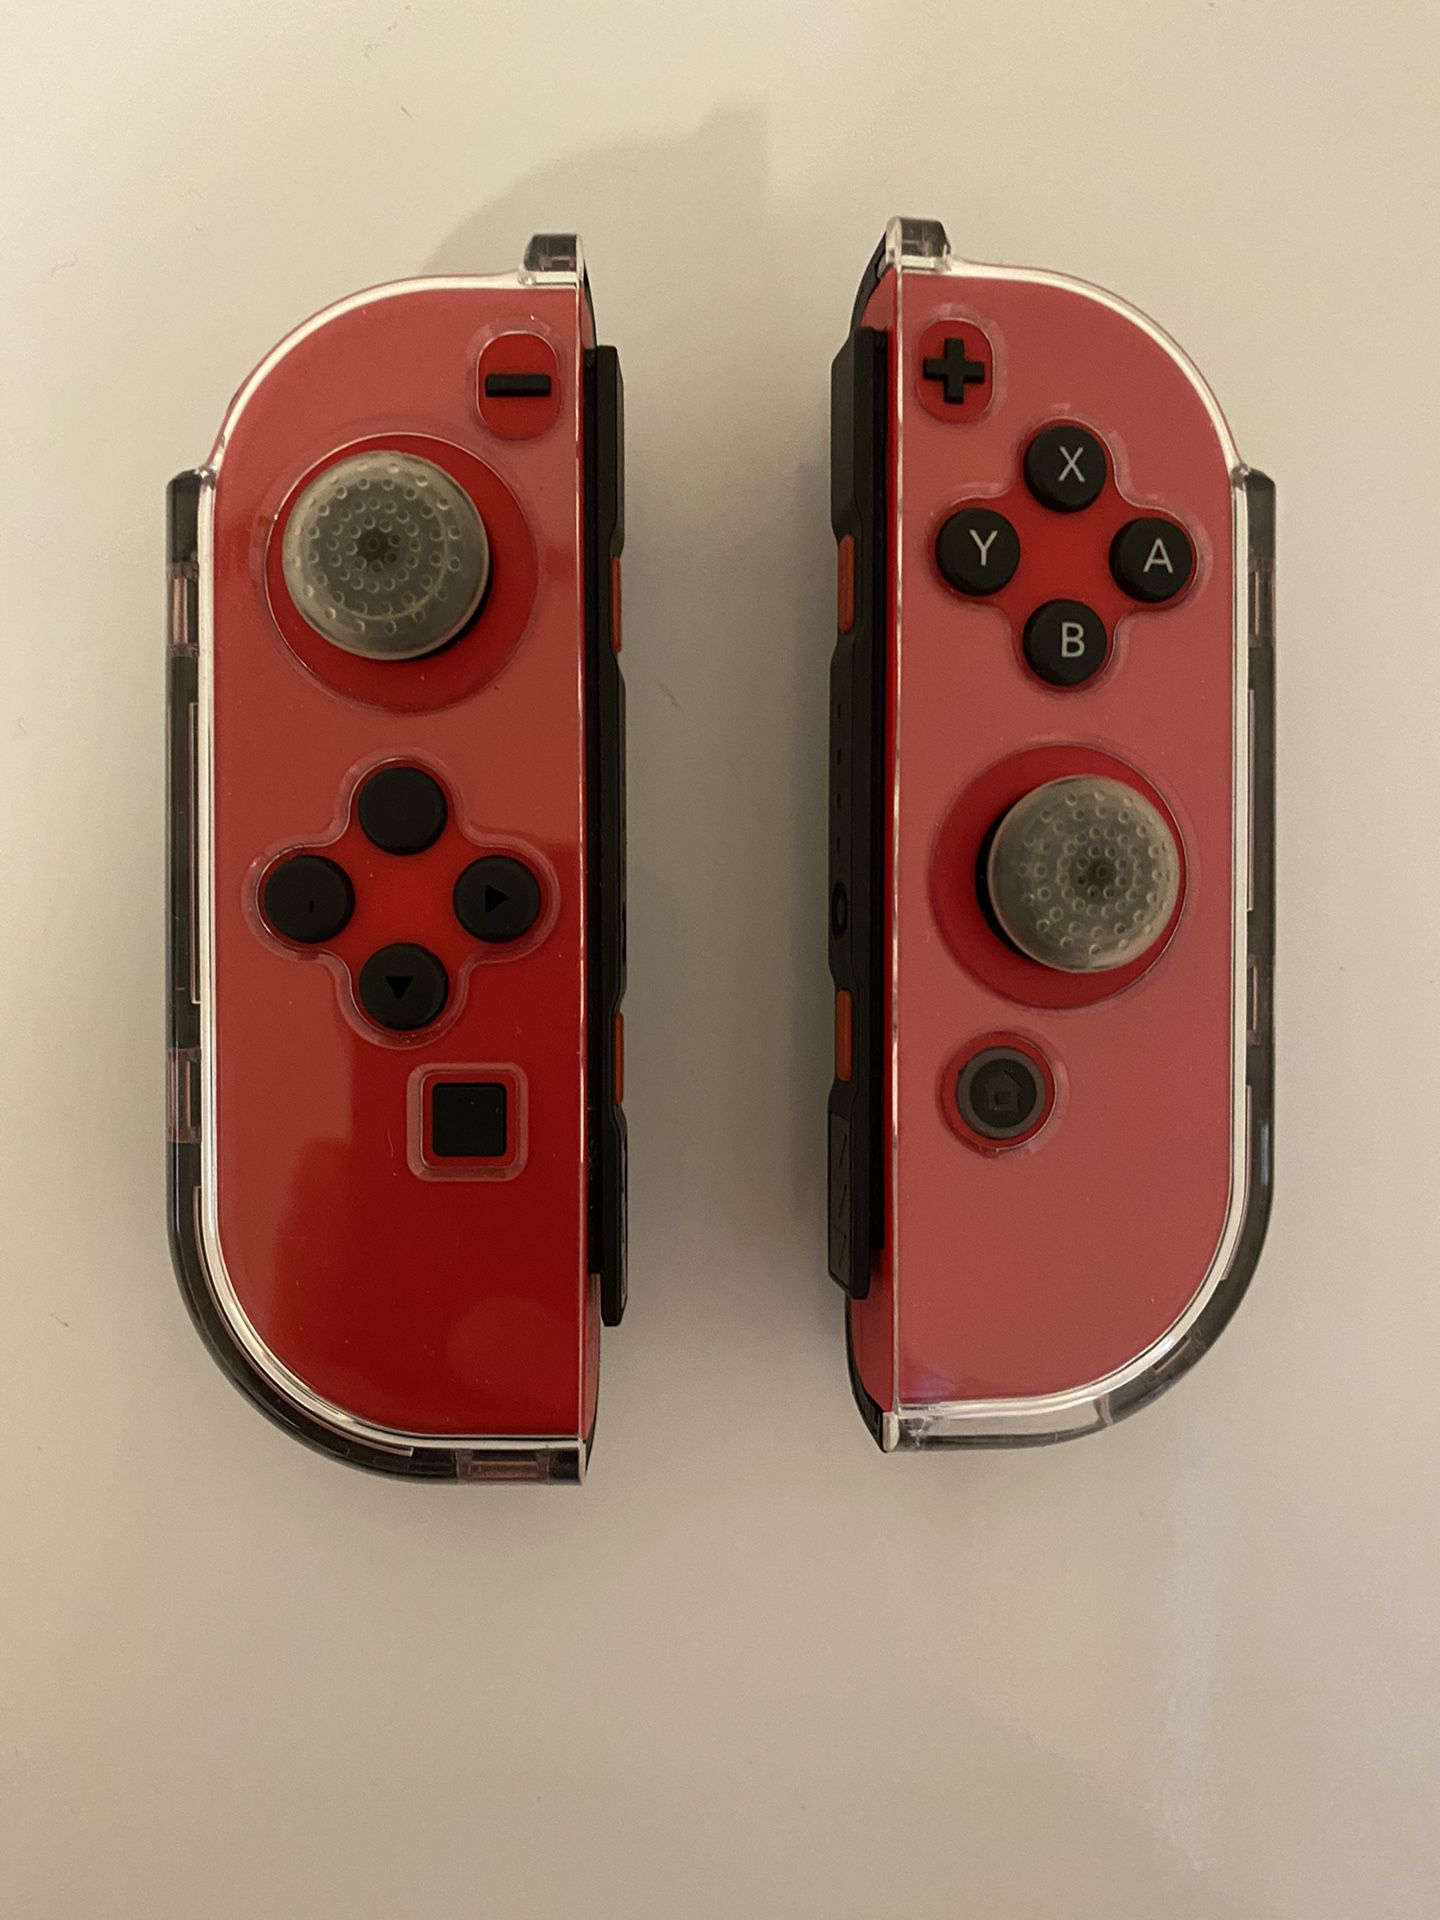 Super rare Mario red edition Nintendo switch joycon